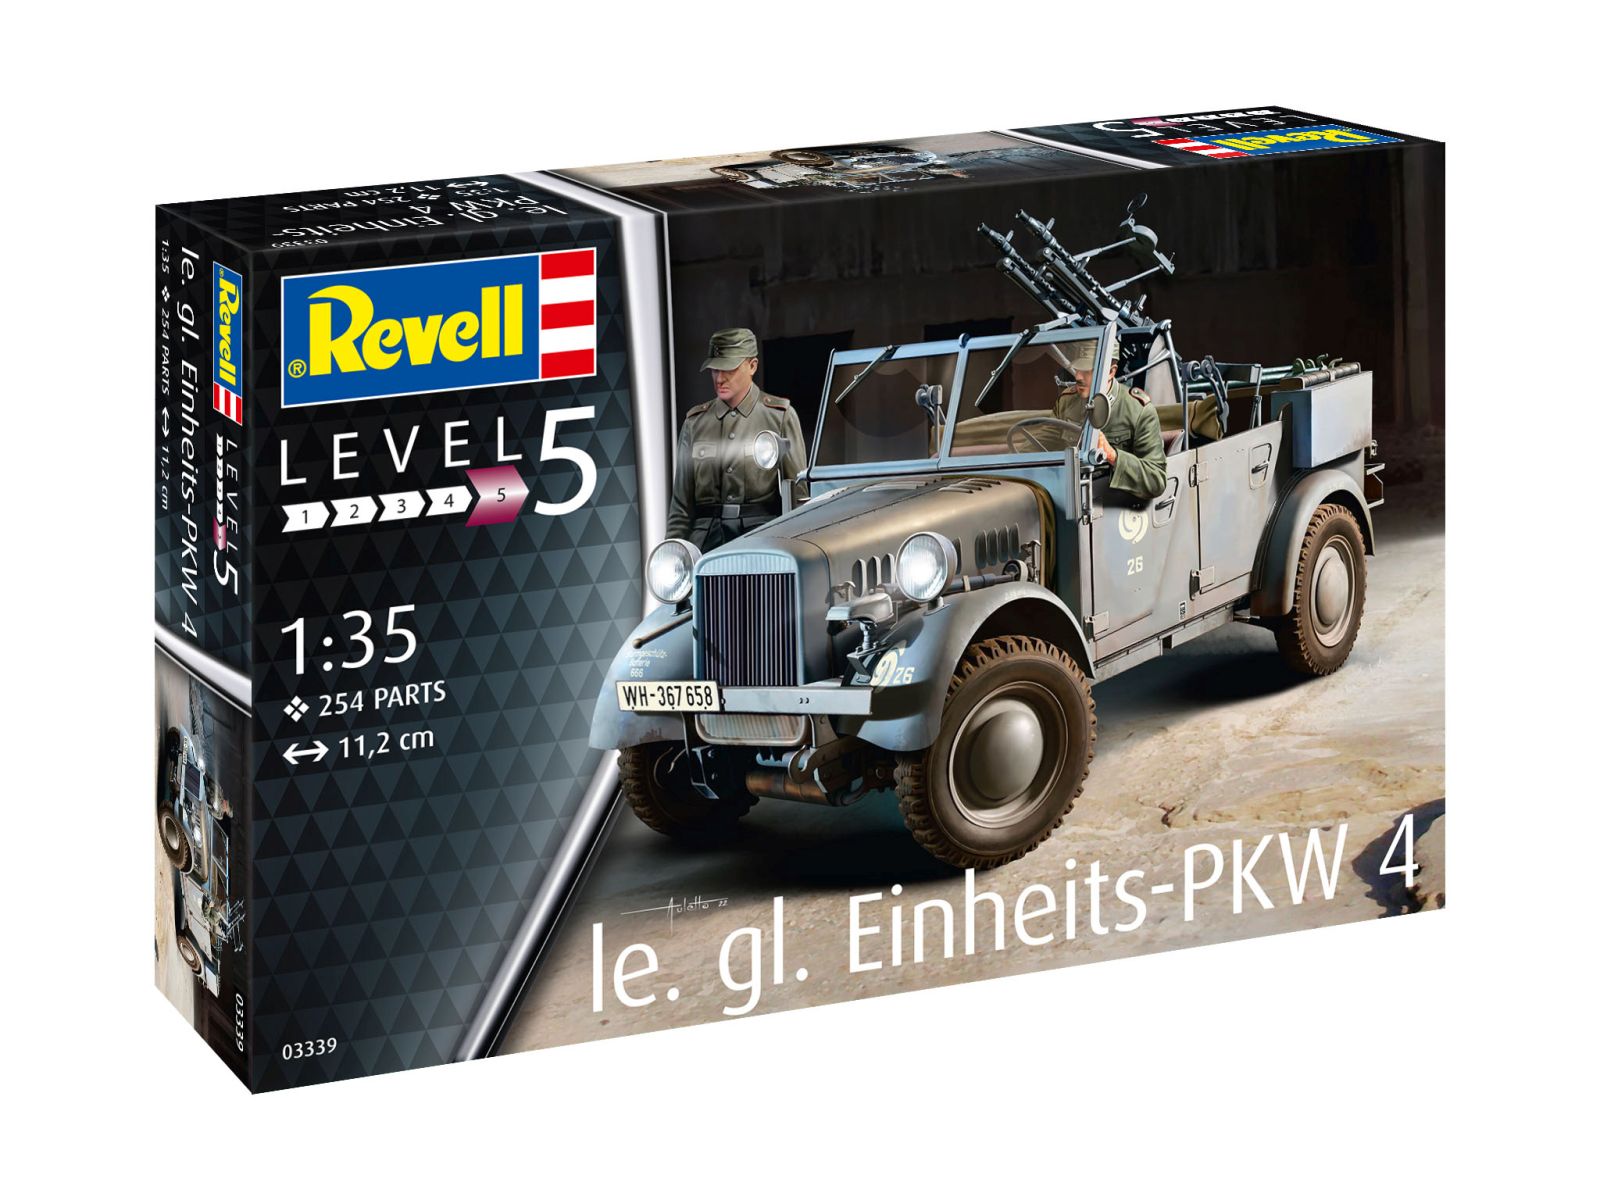 Revell 03339 - le. gl. Einheits-PKW 4